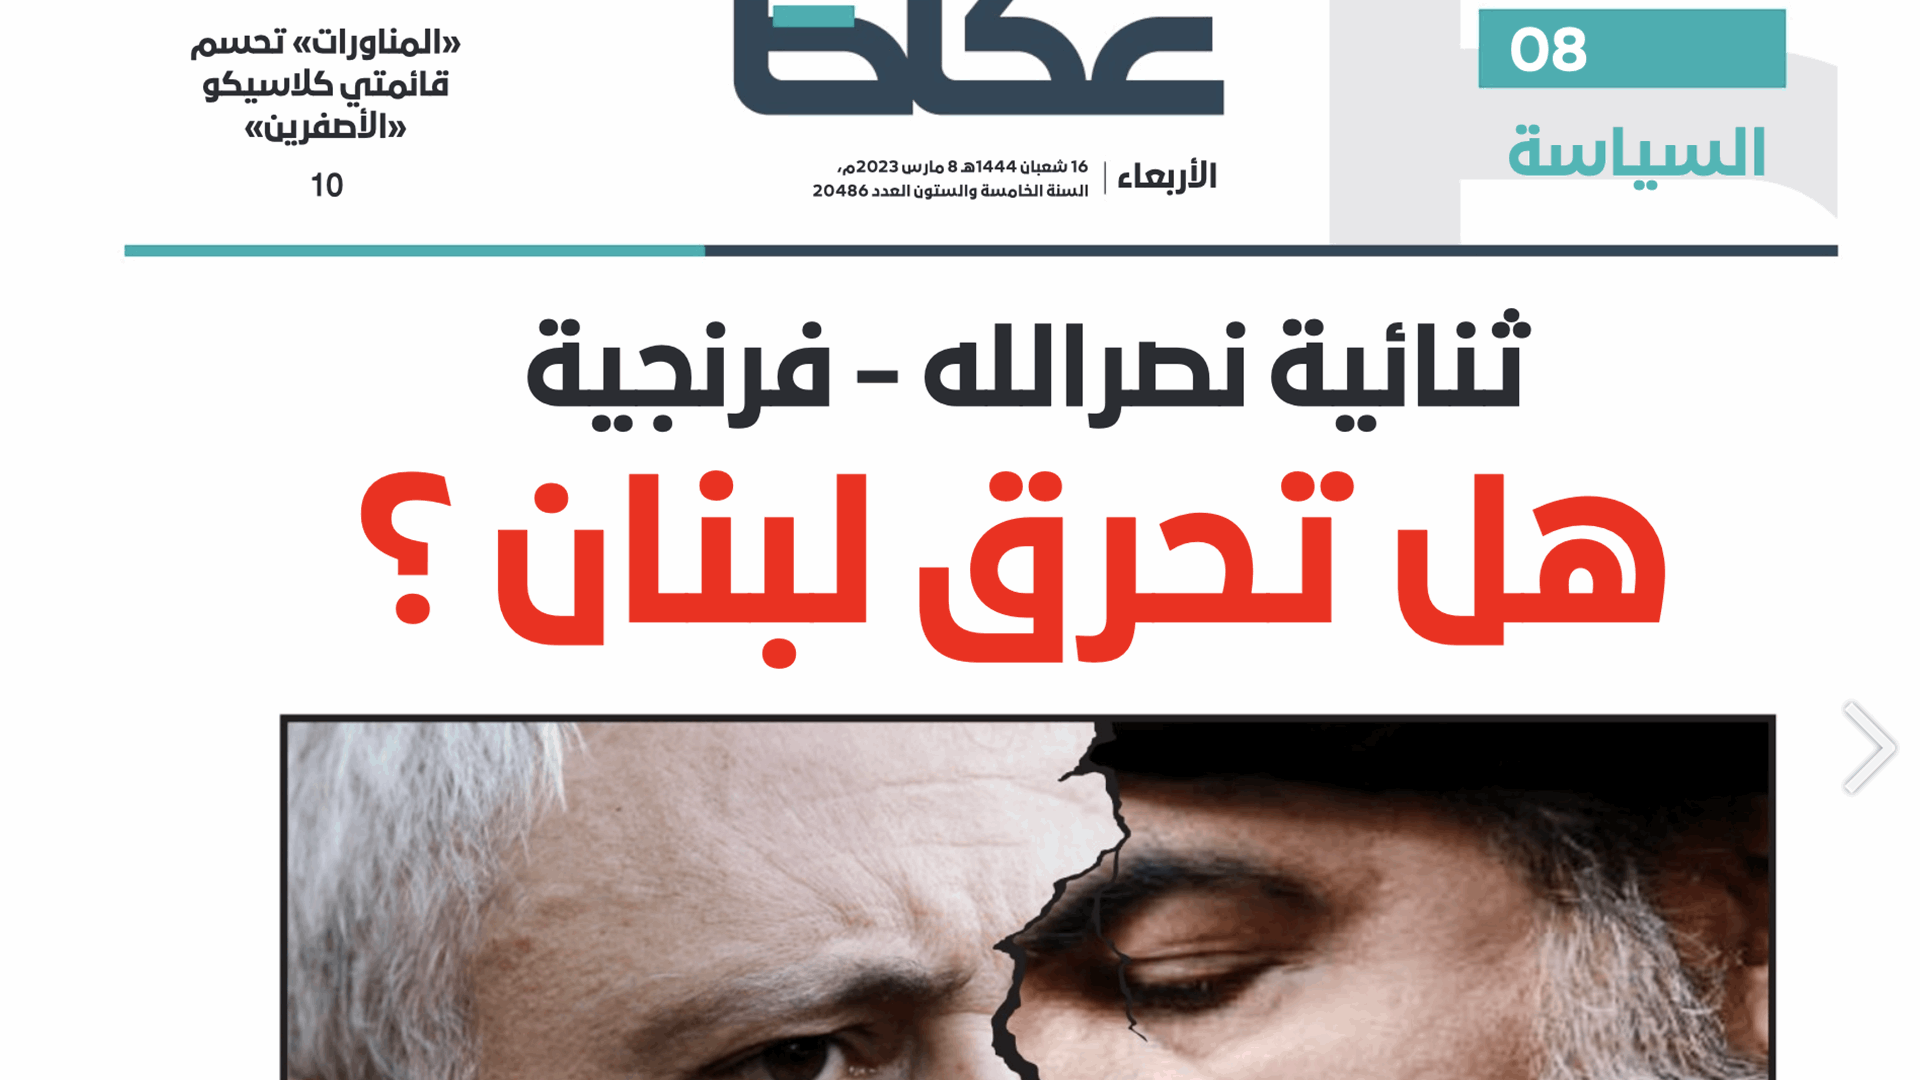 “Will Nasrallah-Frangieh duo burn Lebanon down?”: Saudi newspaper Okaz